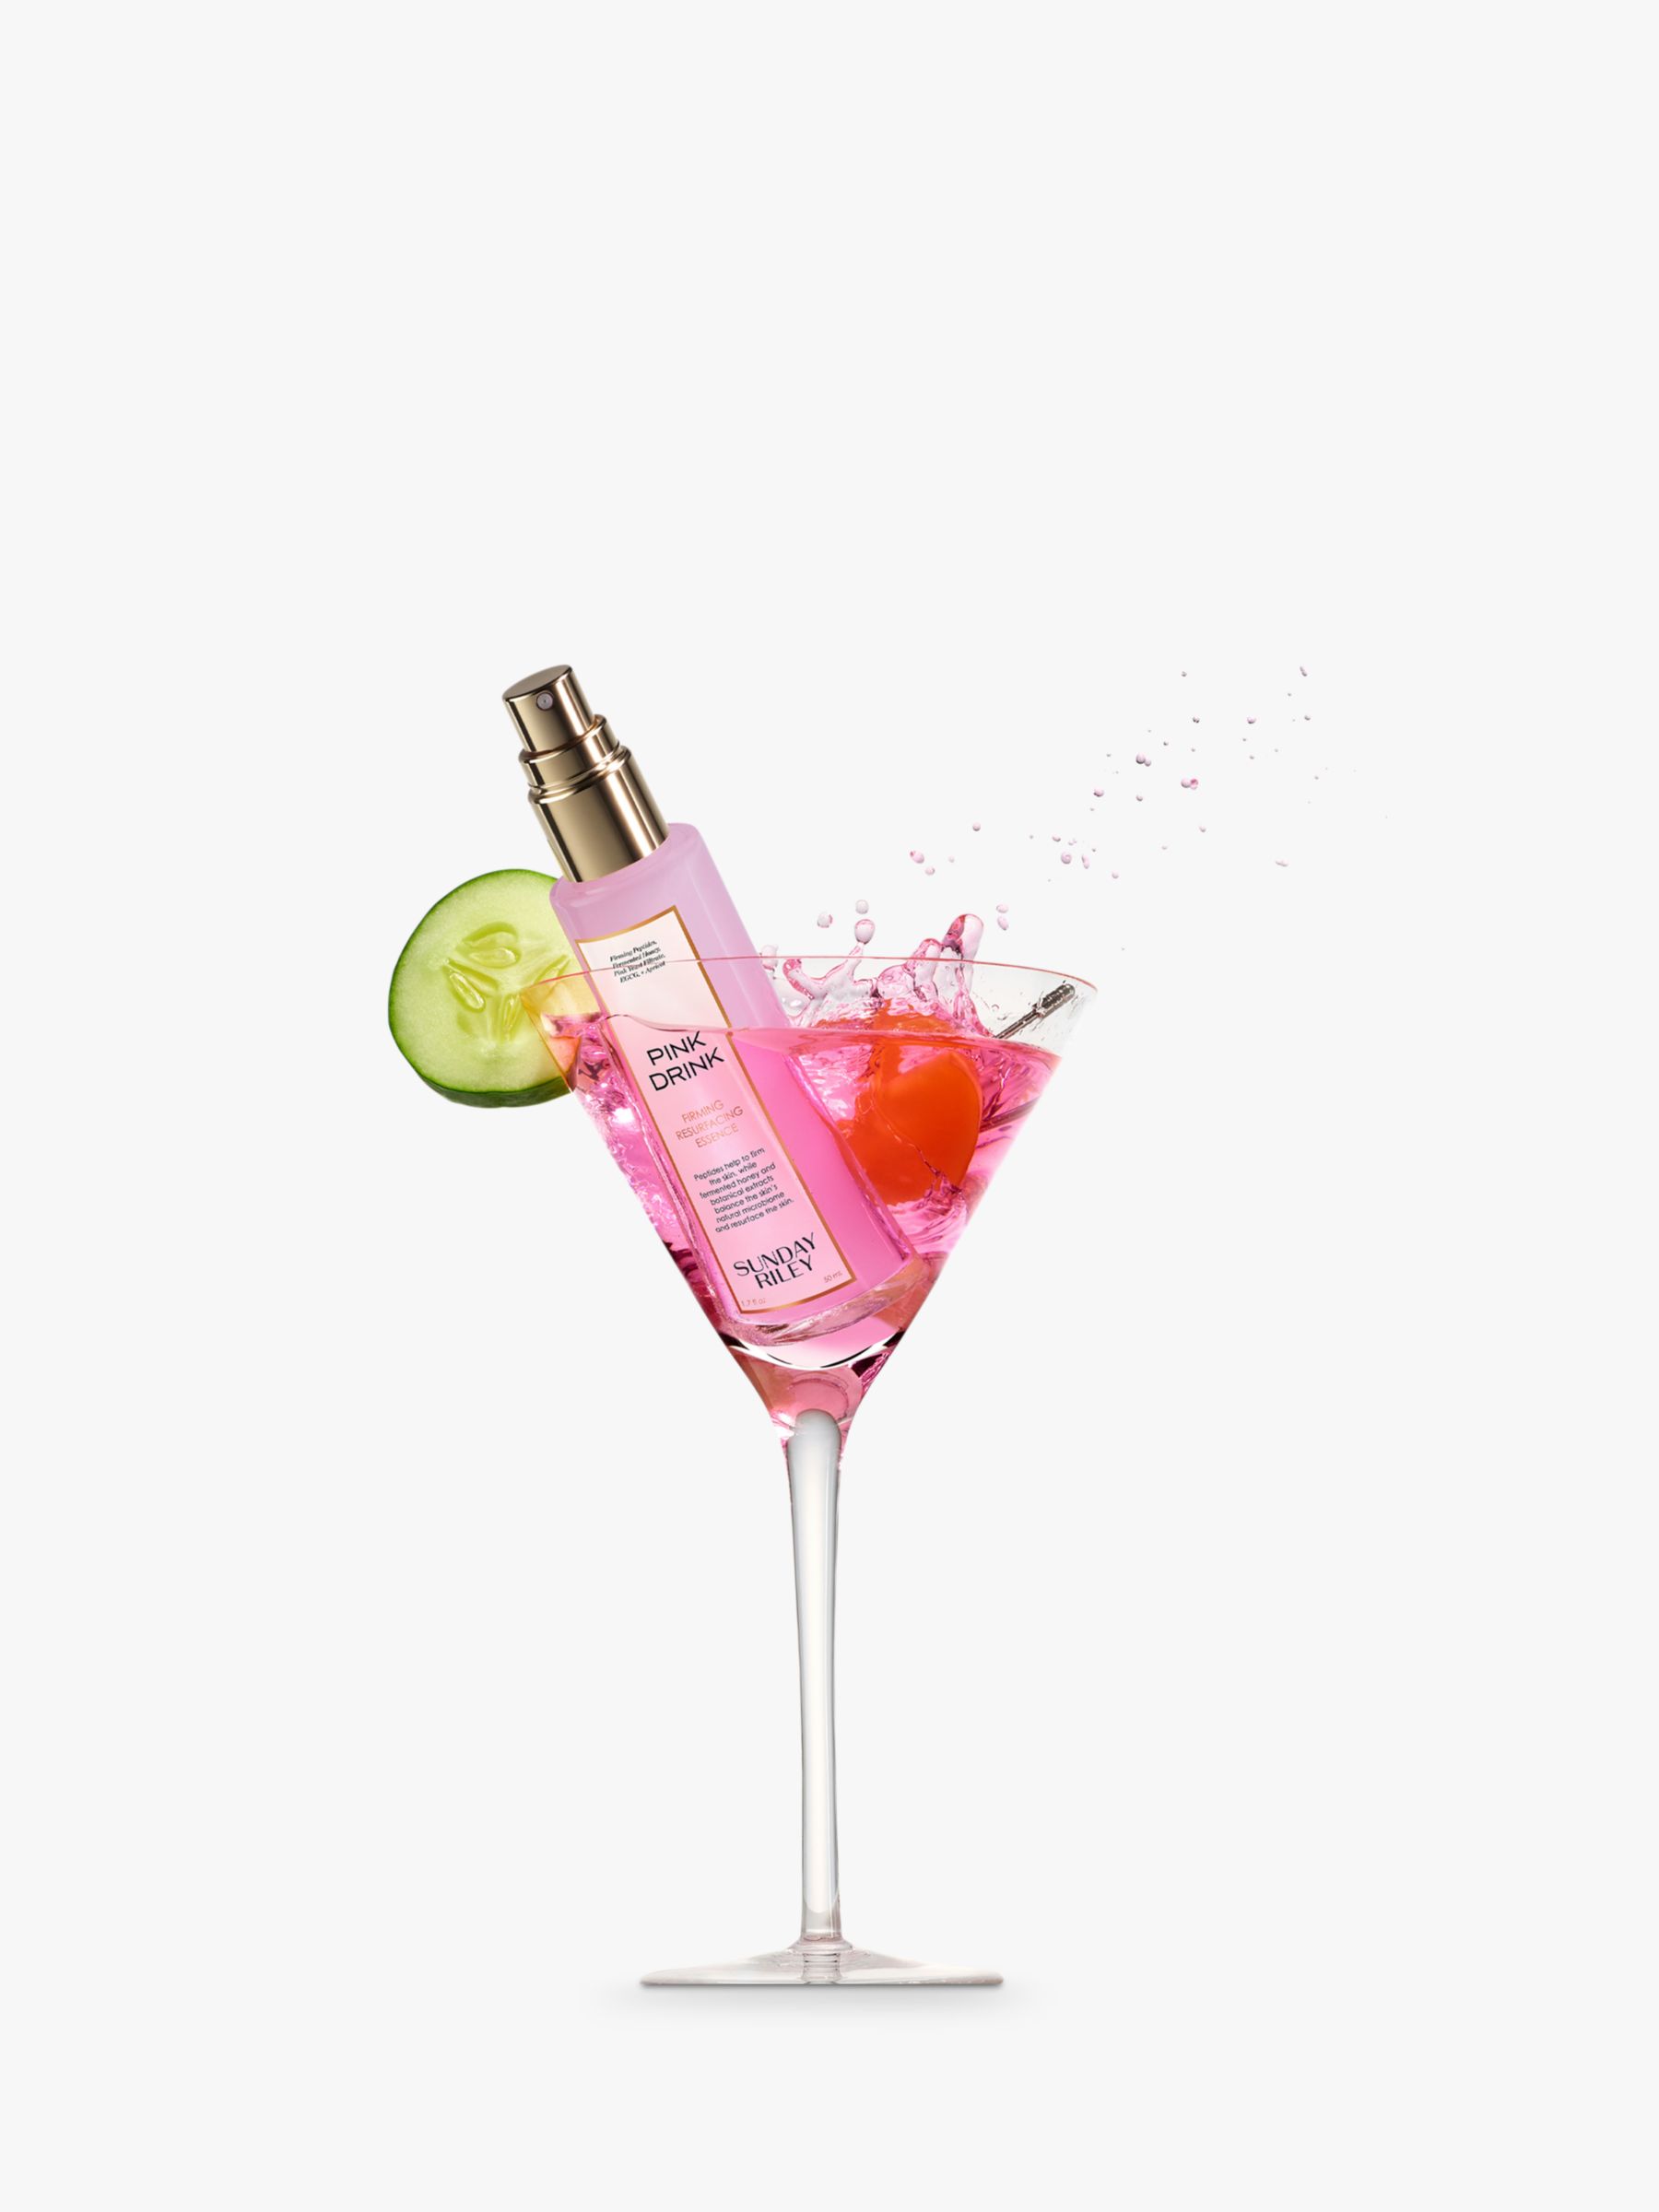 Sunday Riley Pink Drink Resurfacing Essence, 50ml 6